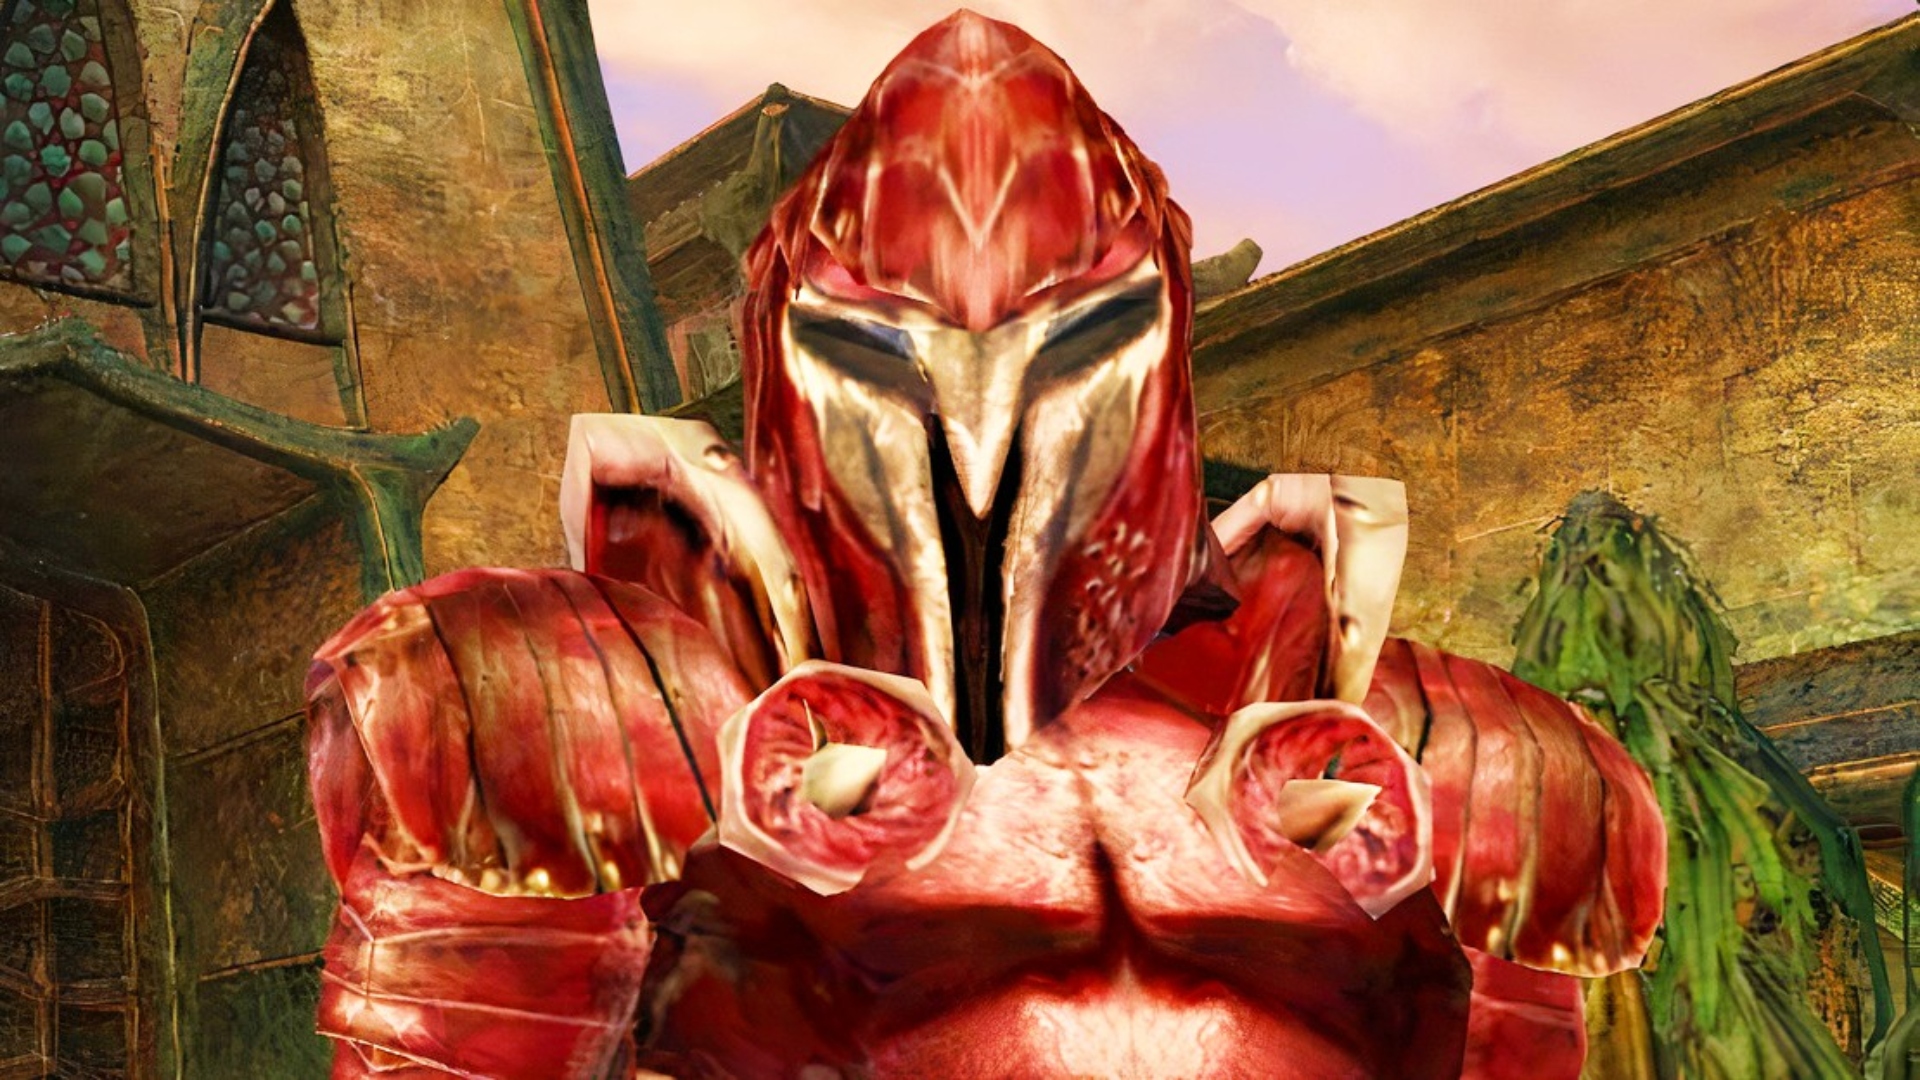 Morrowind gets new maps and quests as Elder Scrolls mod renews Tamriel